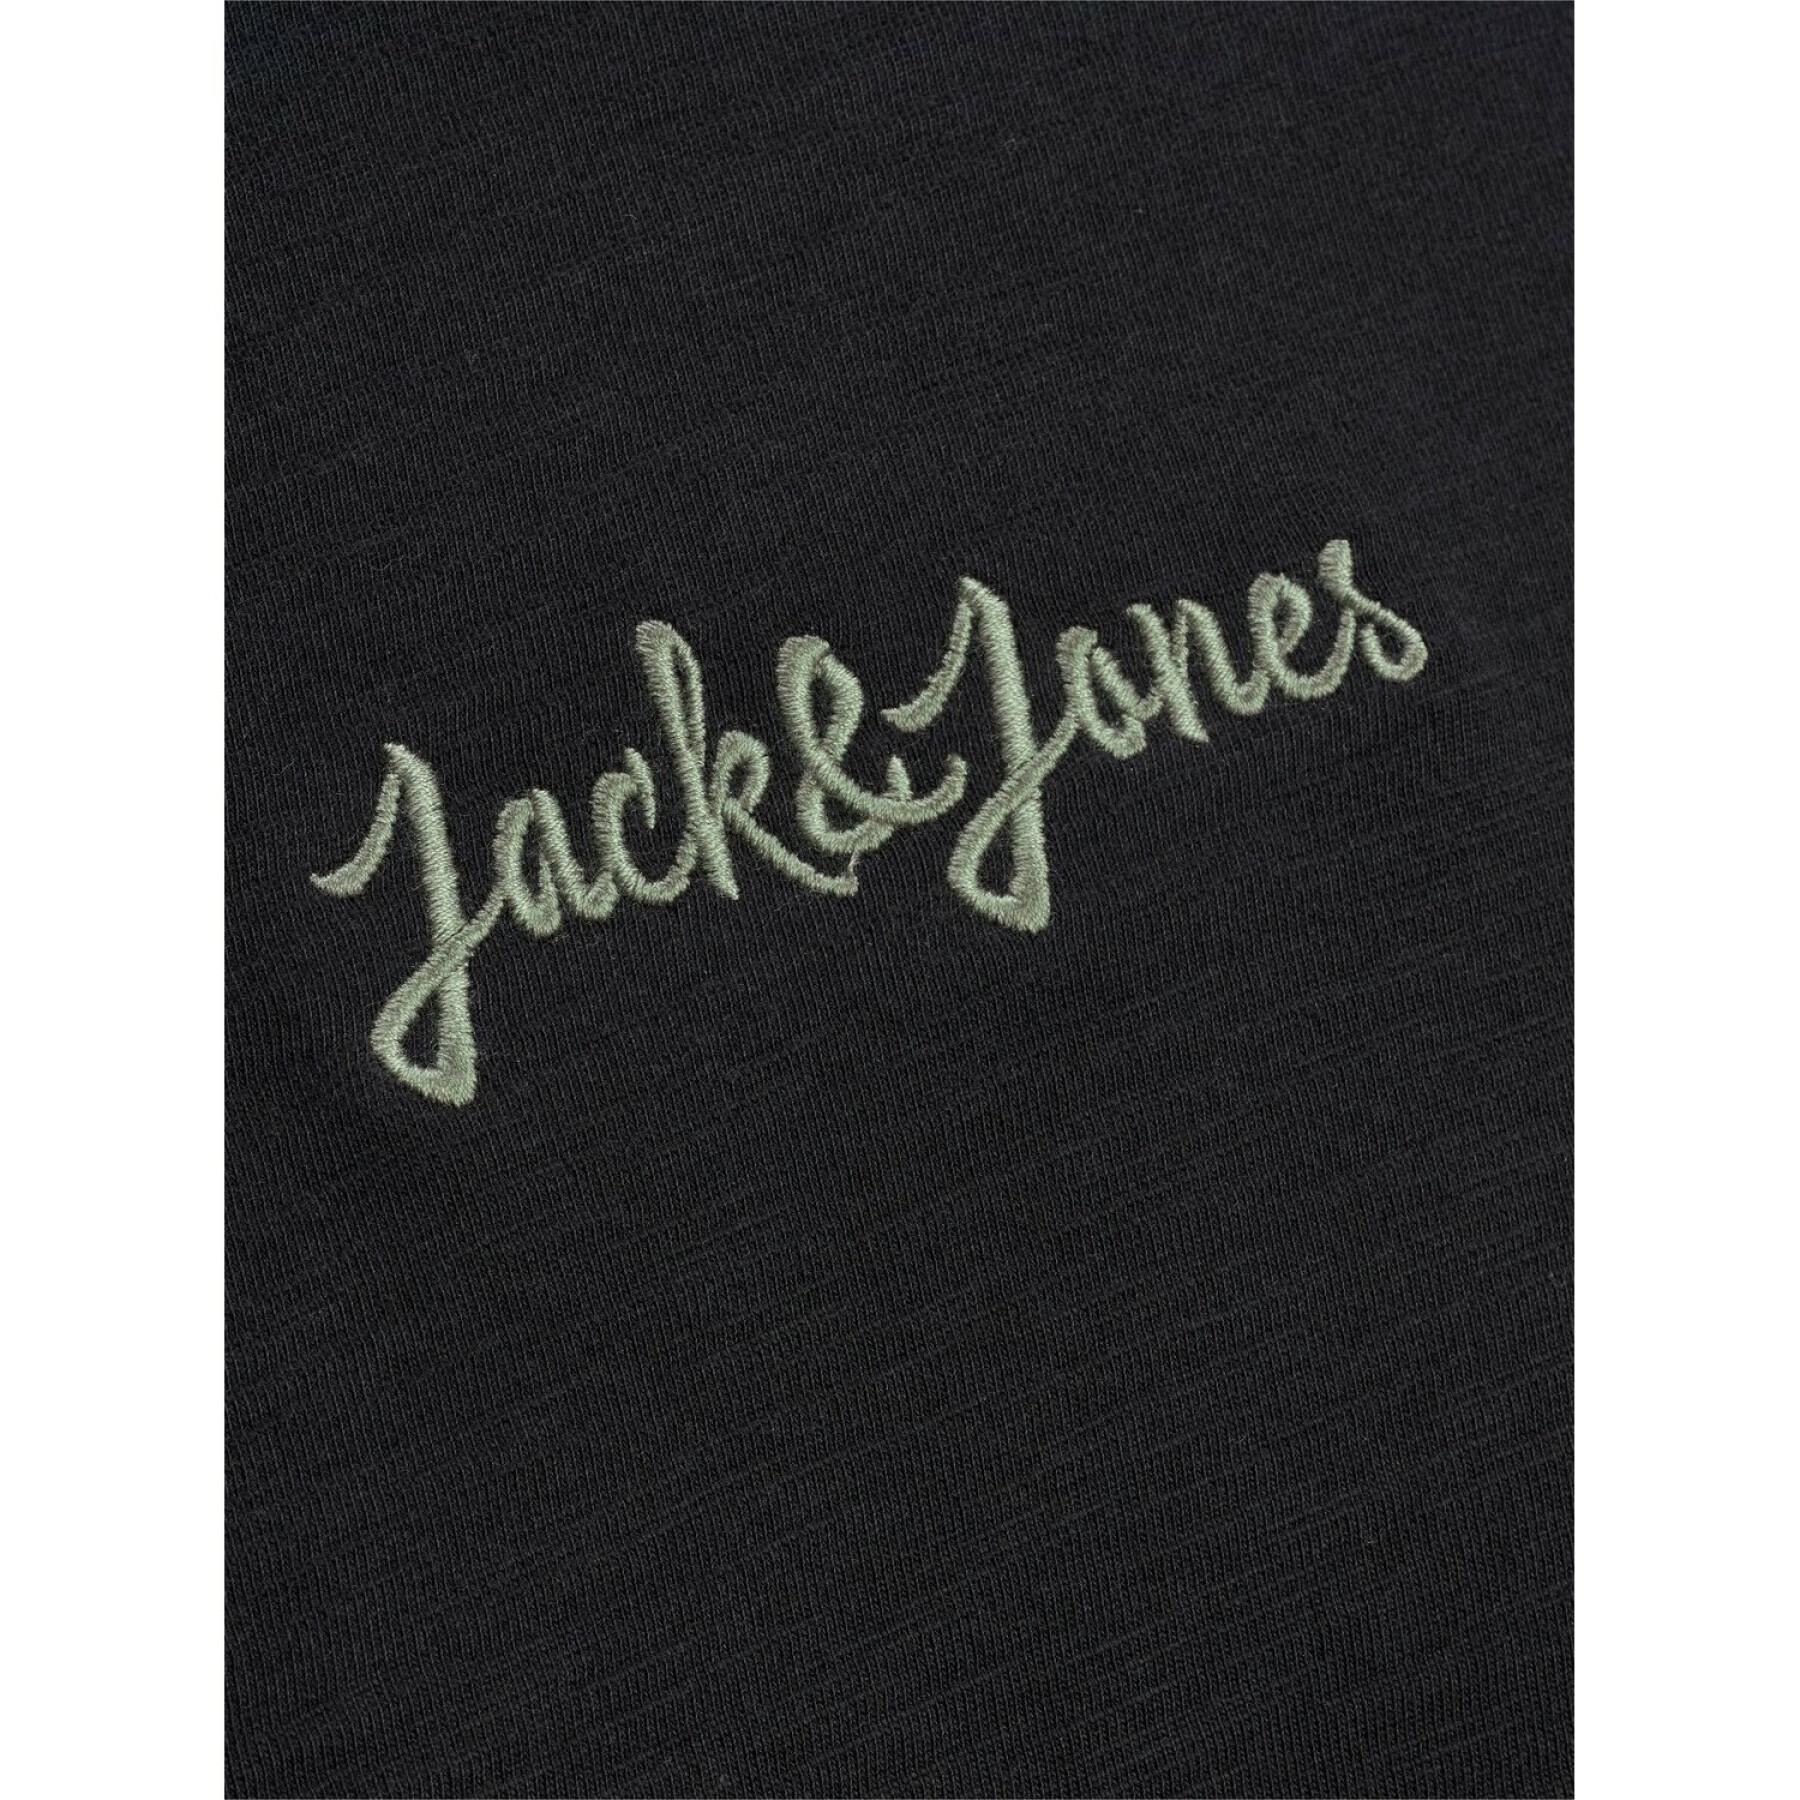 Camiseta Jack & Jones stockholm